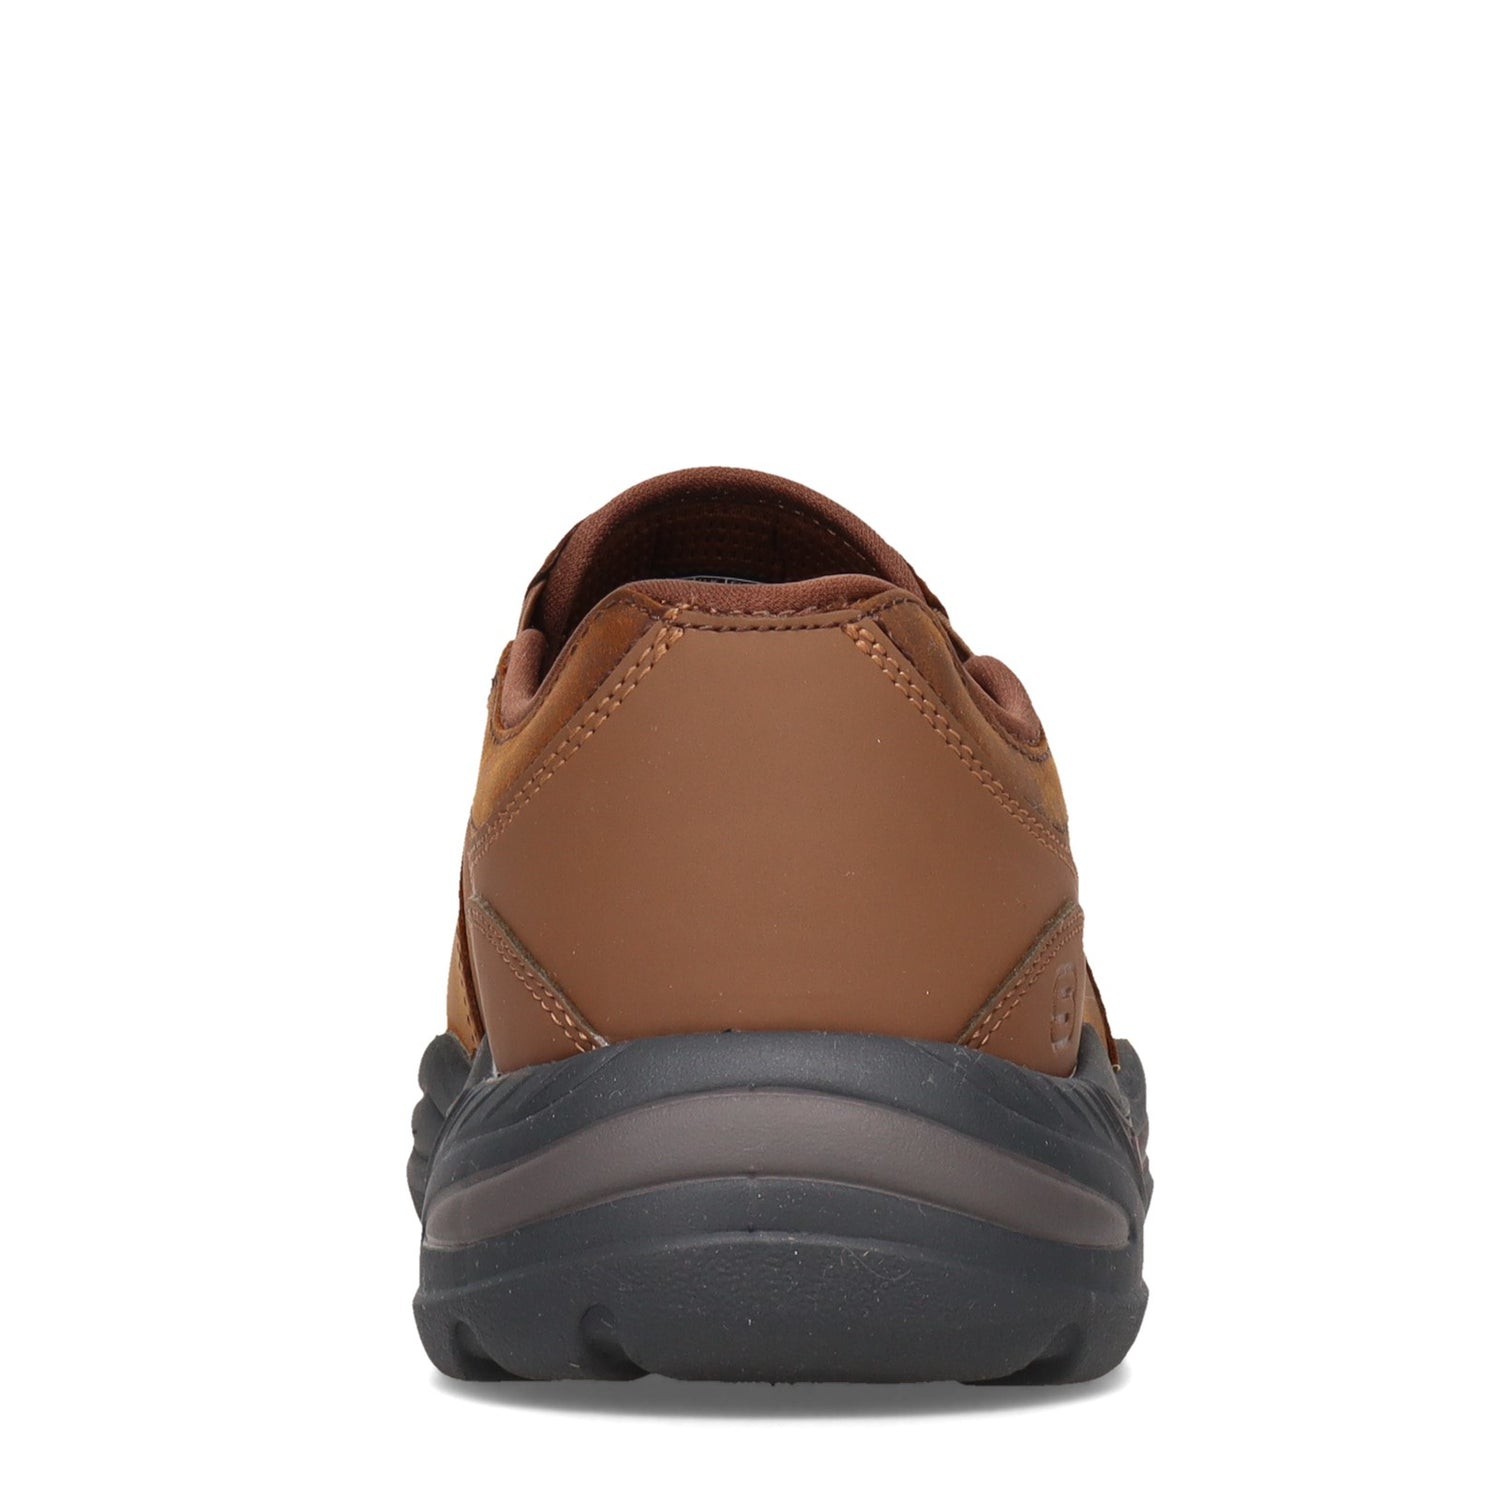 NEW Skechers Arch Fit Motley Vaseo Slip On Shoes Black 204495 Men's Size 8.5